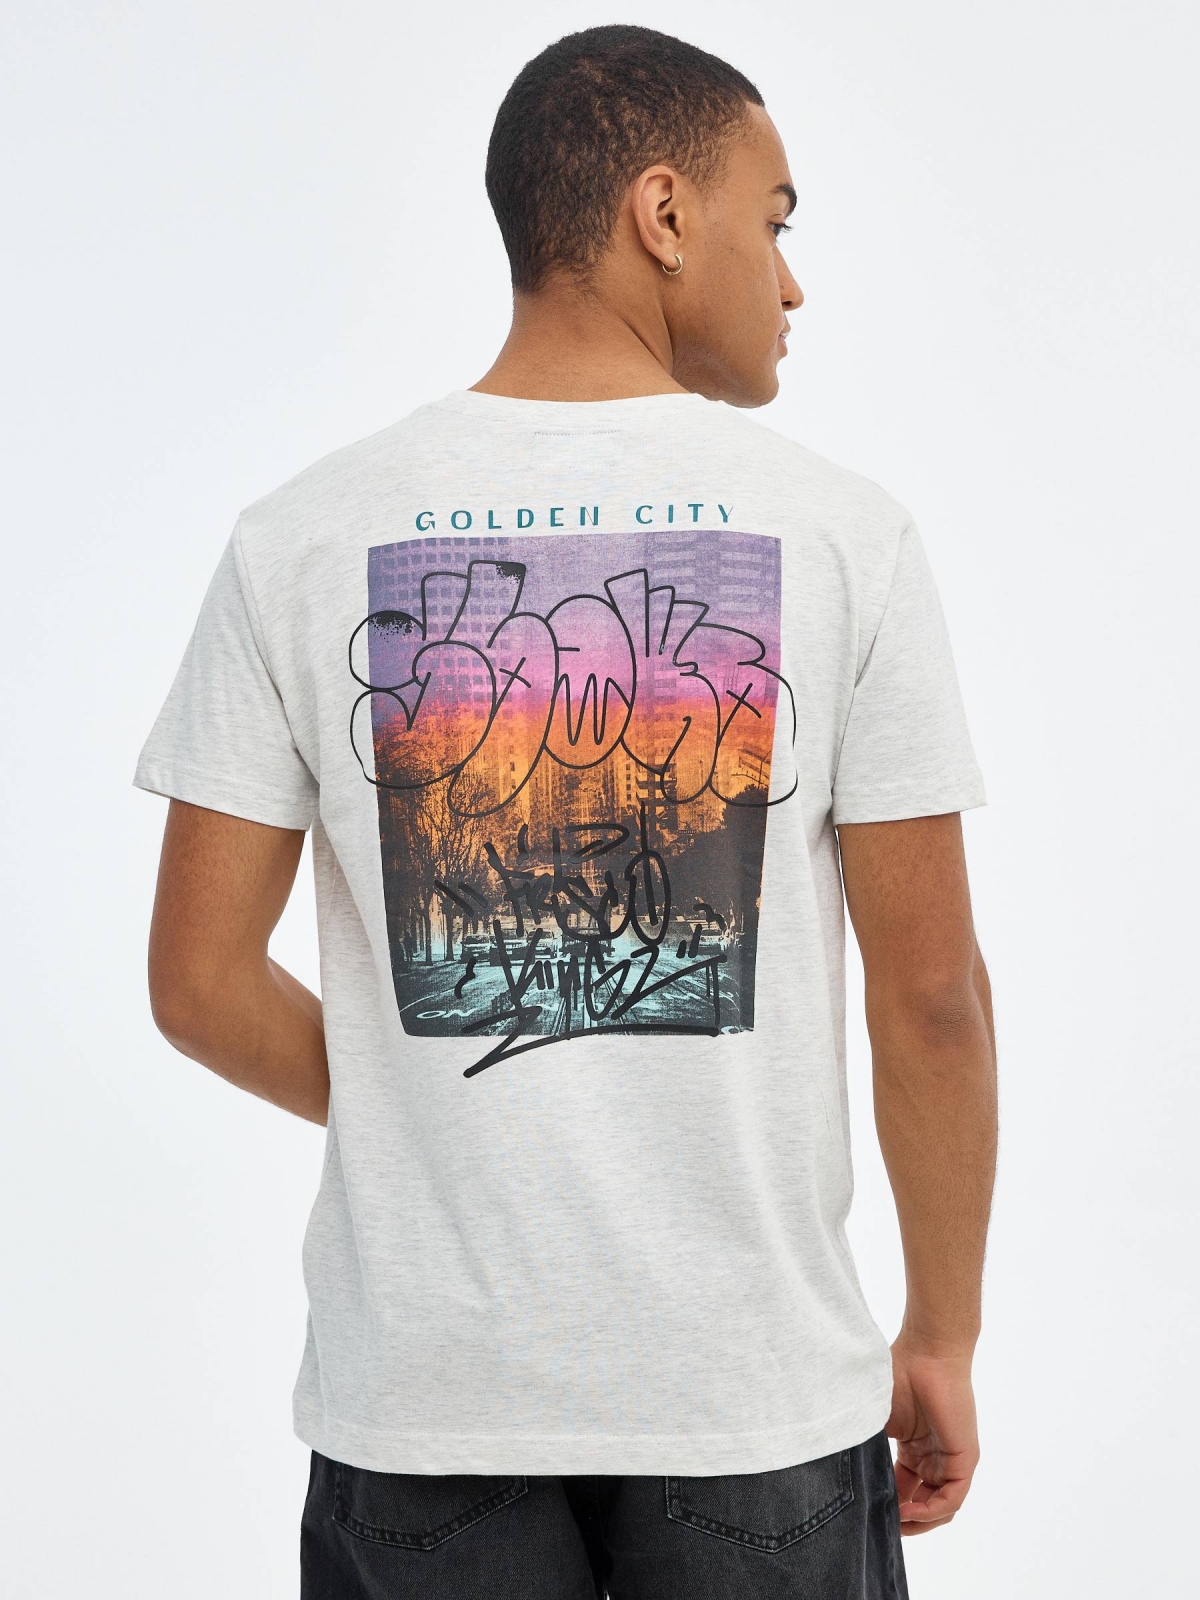 Camiseta con foto y grafiti gris vista media trasera